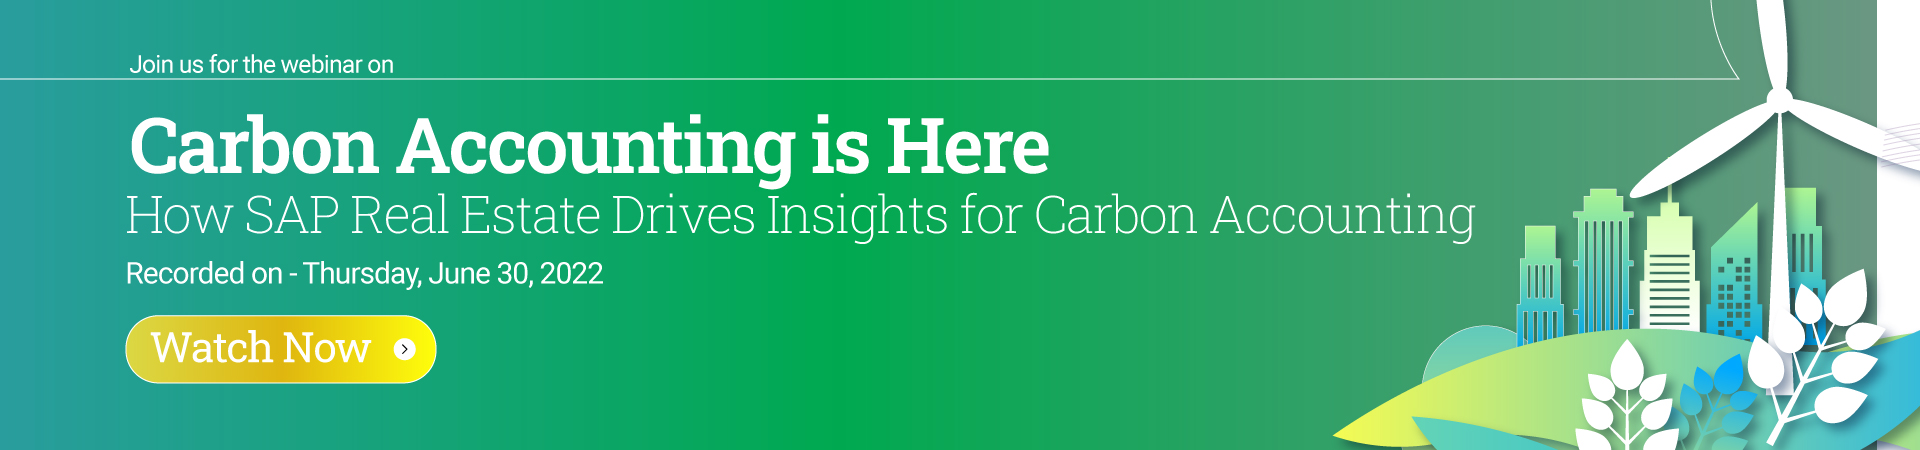 Carbon Accounting Webinar Banner